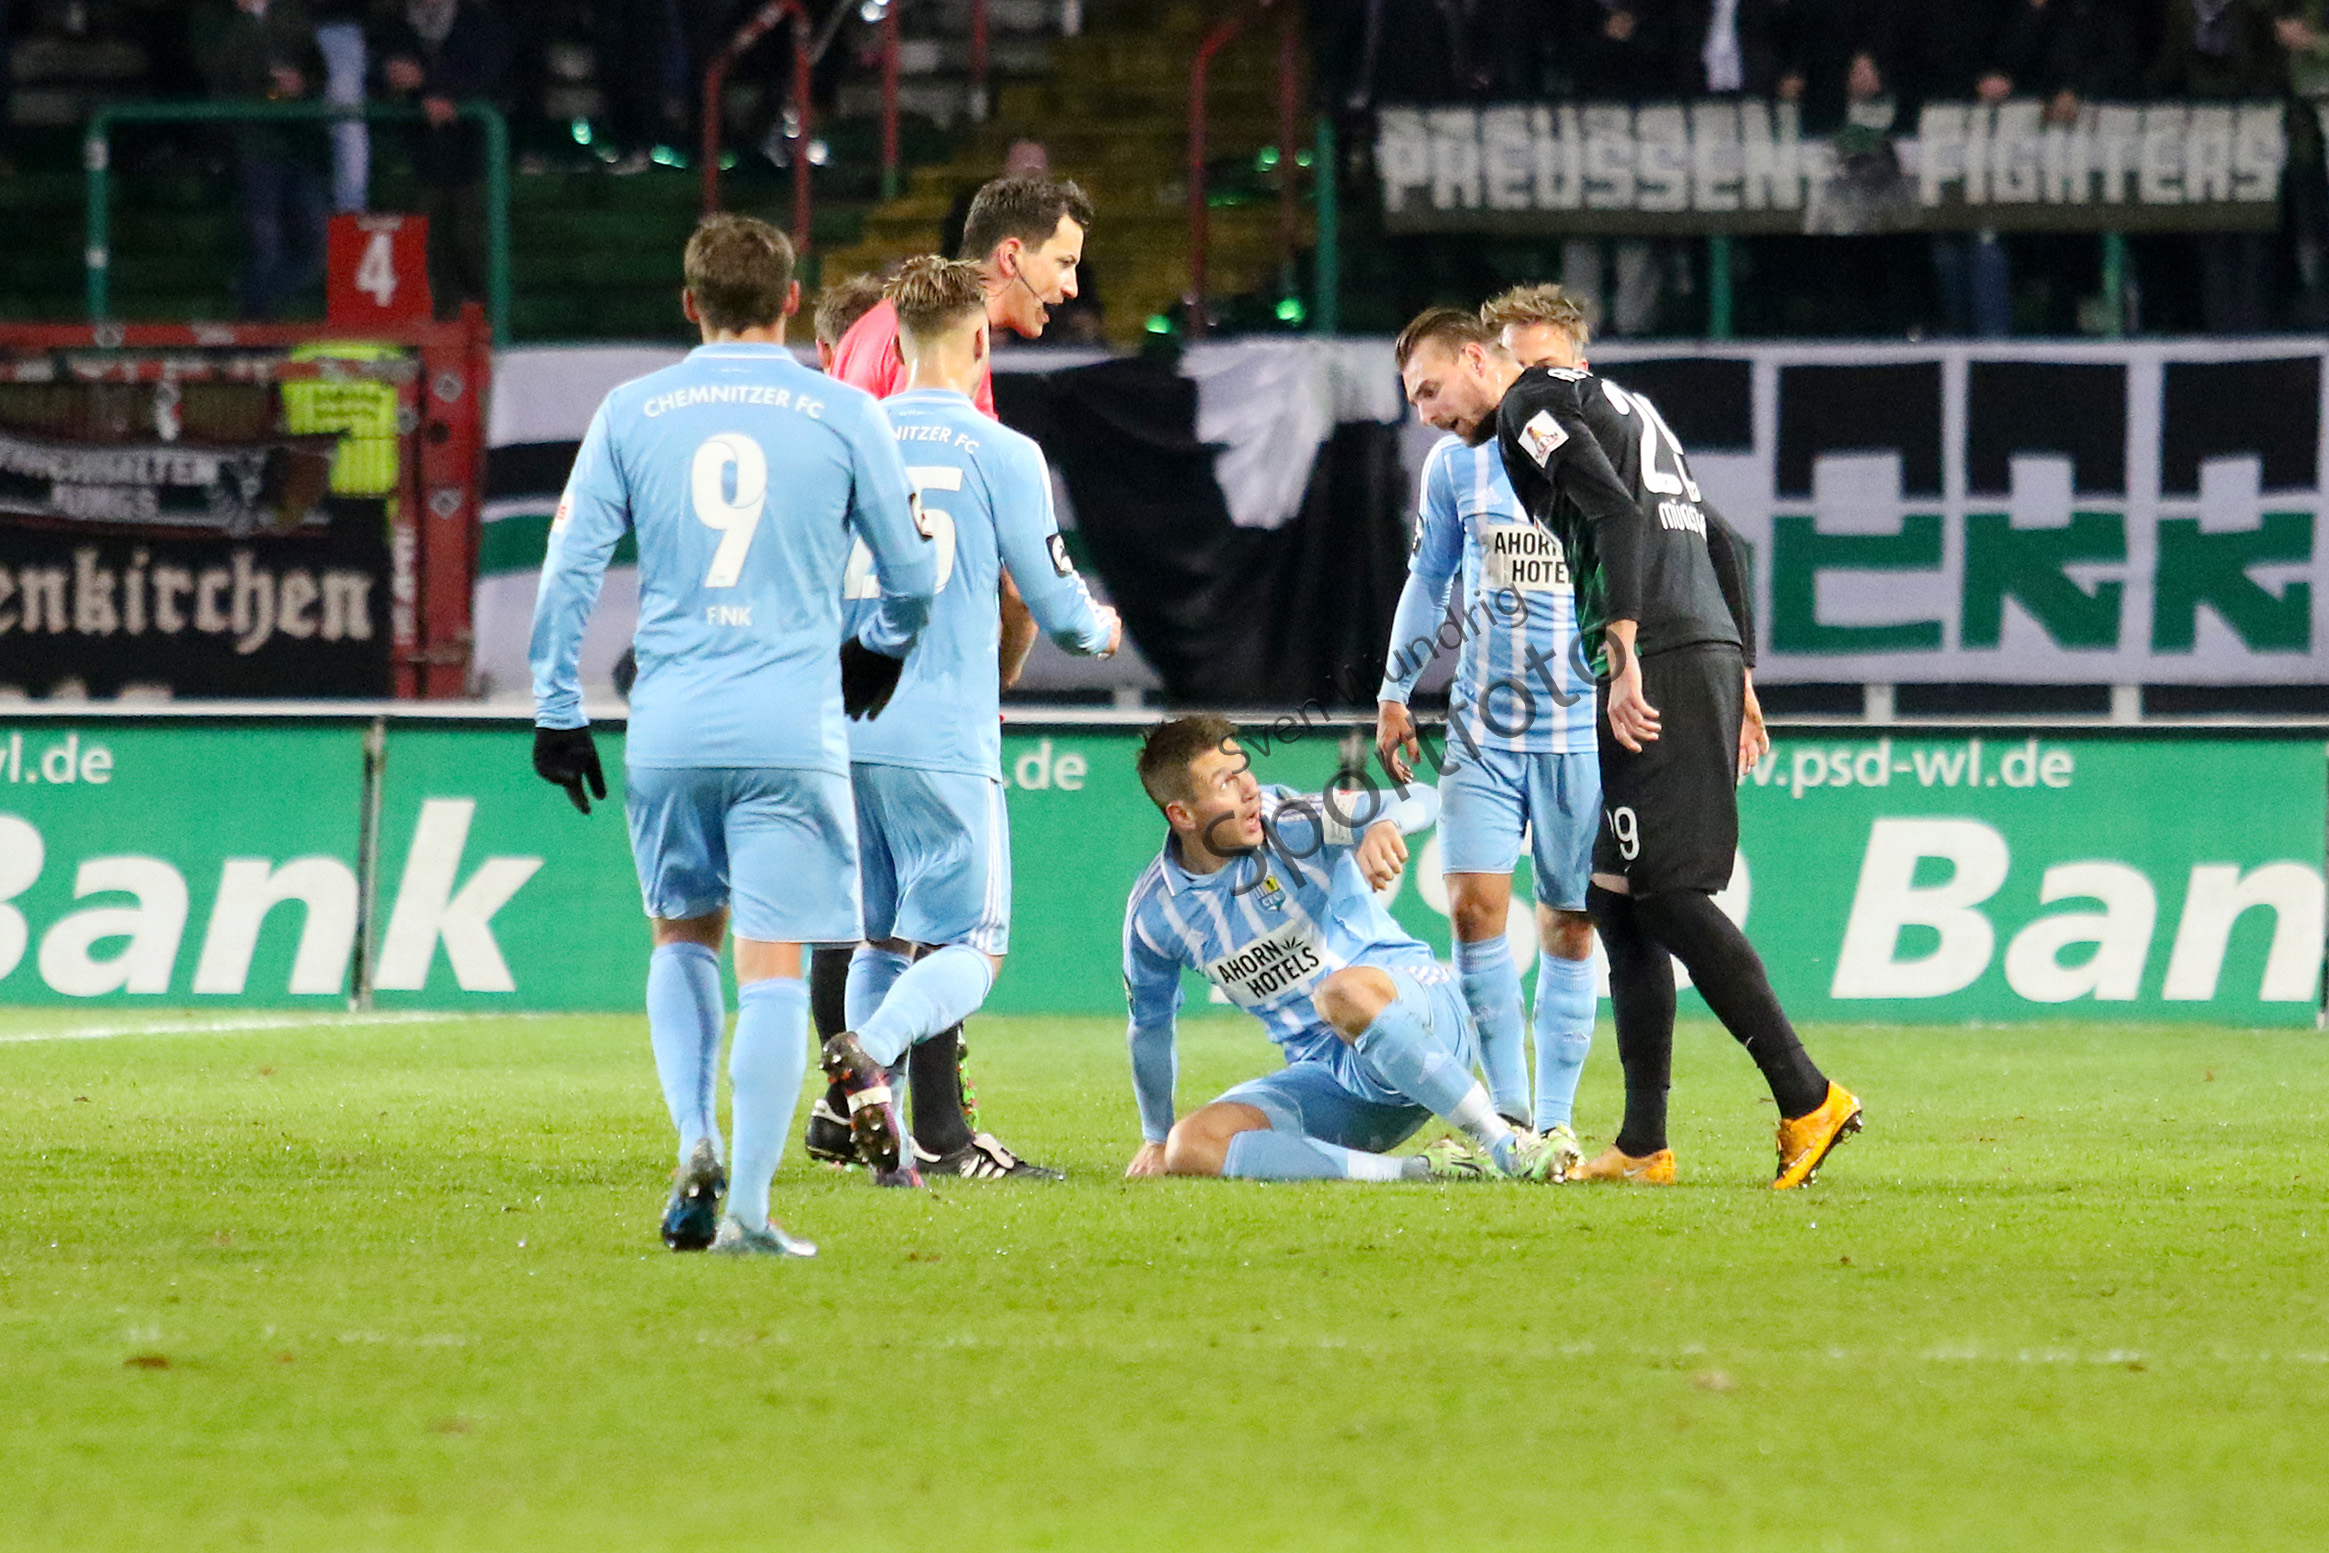 3. Liga - 16/17 - Preussen Muenster vs. Chemnitzer FC